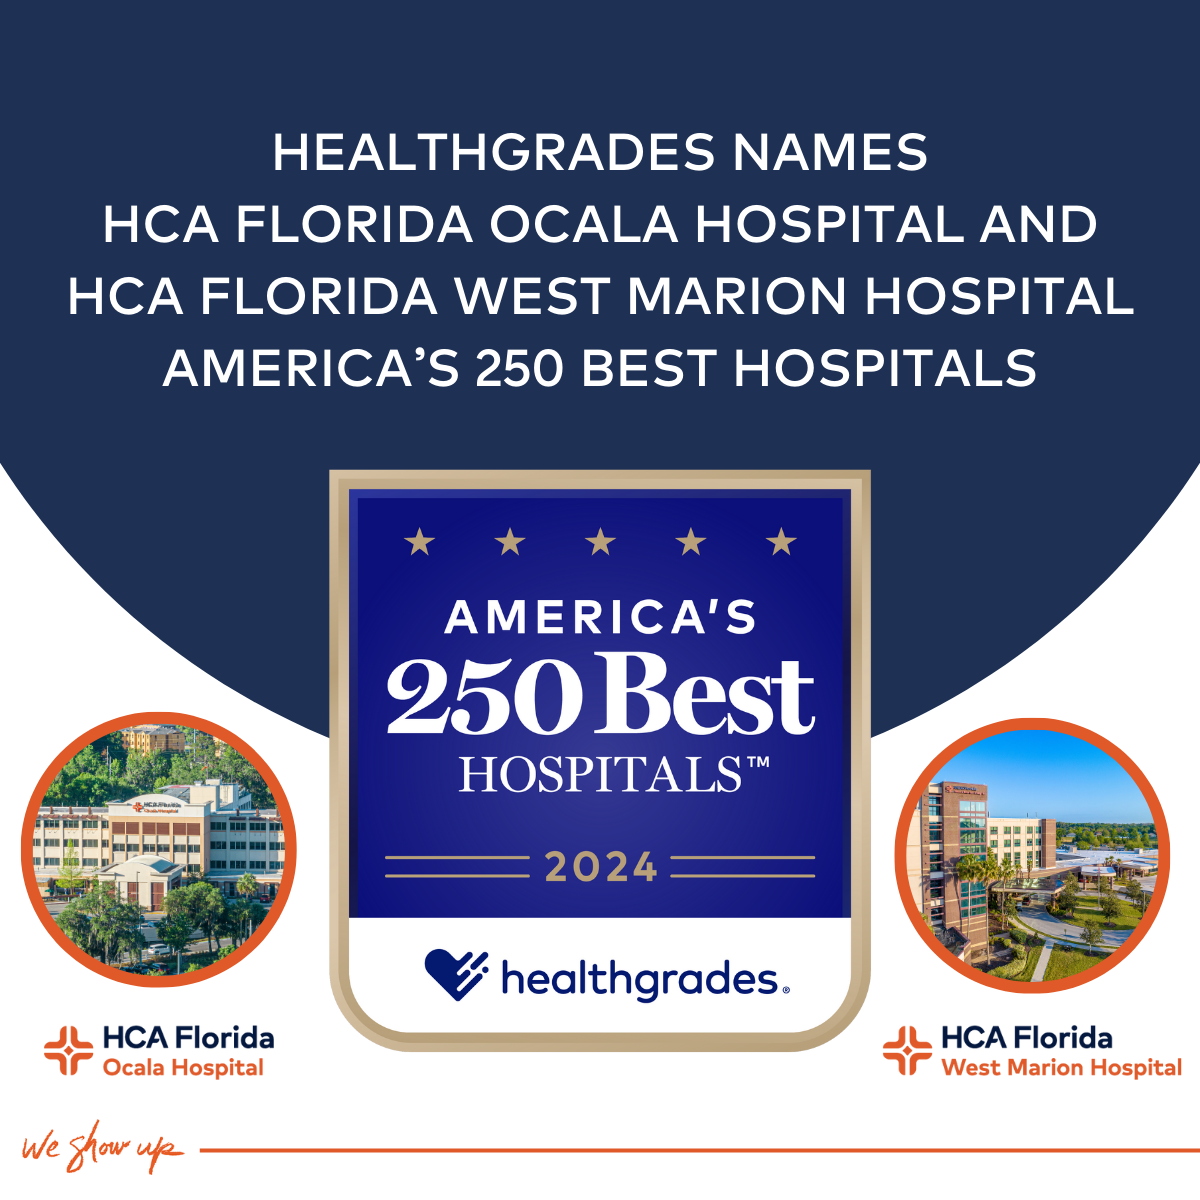 Healthgrades names HCA Florida Ocala Hospital and HCA Florida West Marion Hospital America's 250 Best Hospitals